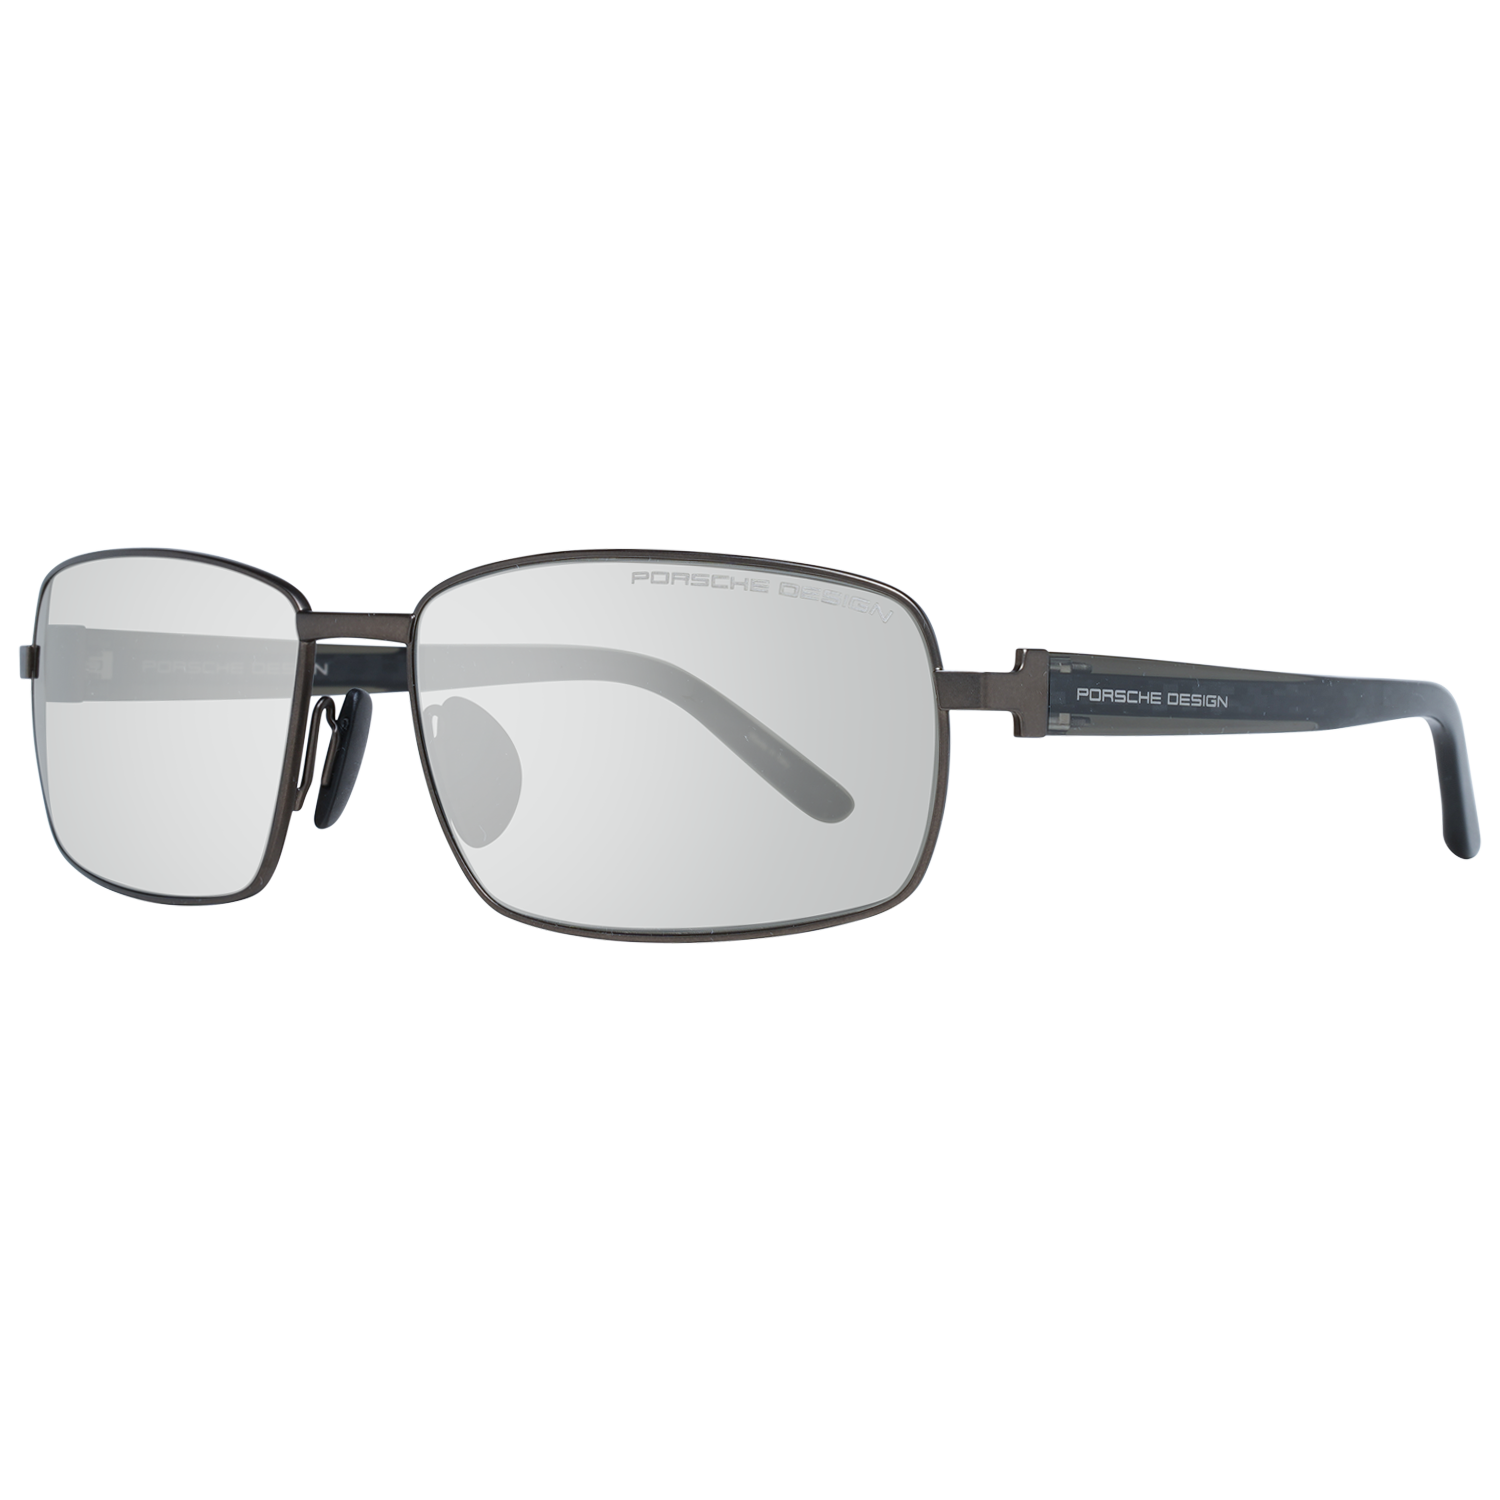 Porsche Design Sunglasses Porsche Design Sunglasses P8902 D 63 Eyeglasses Eyewear UK USA Australia 